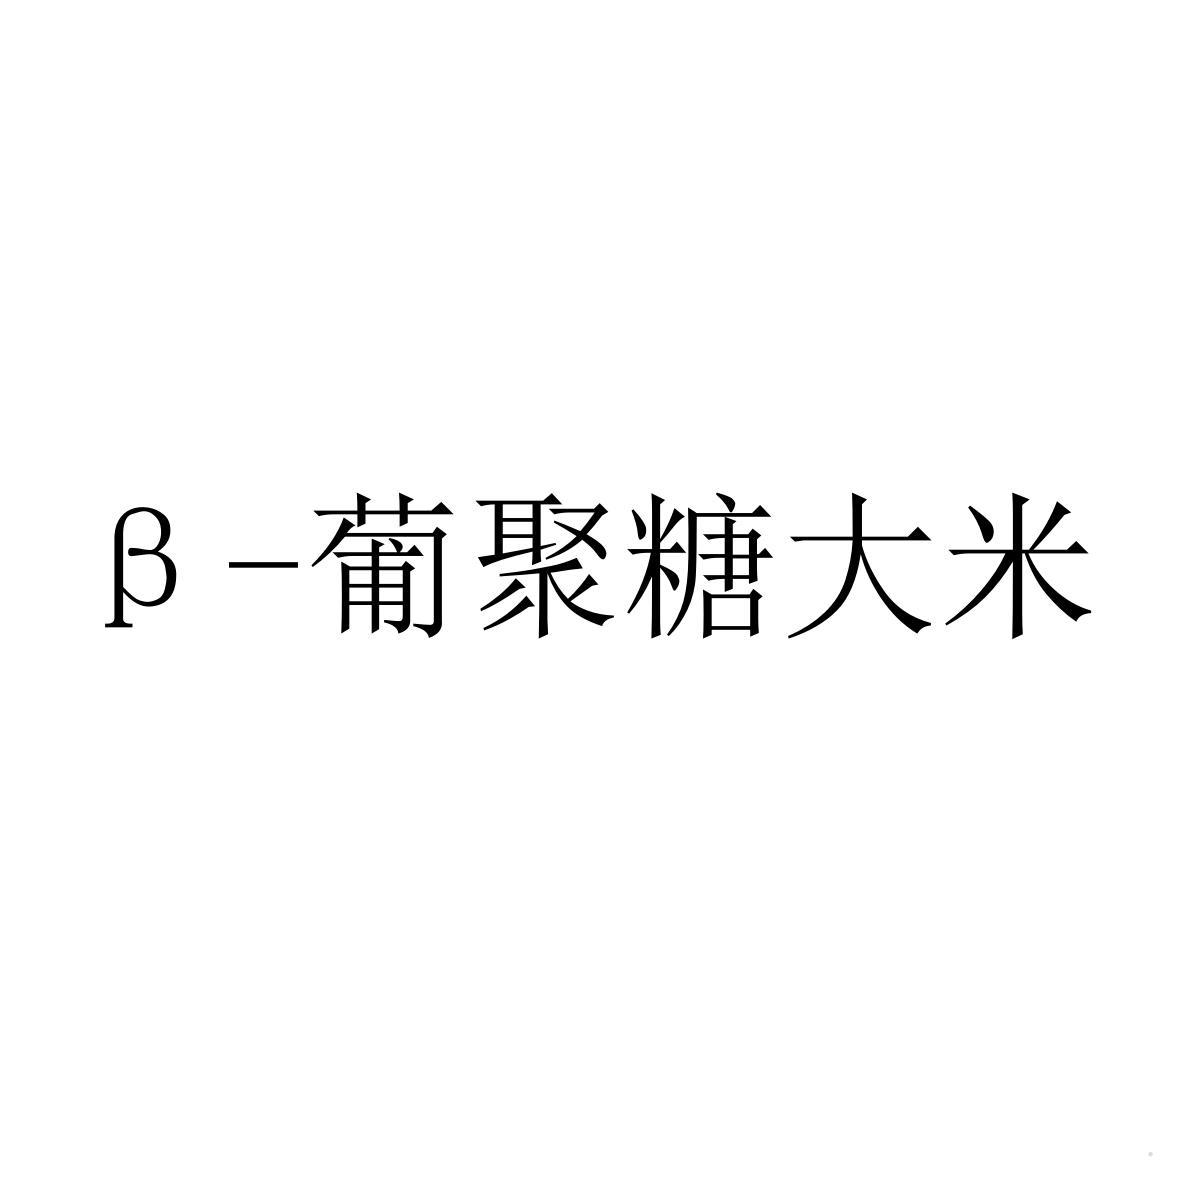 B-葡聚糖大米logo